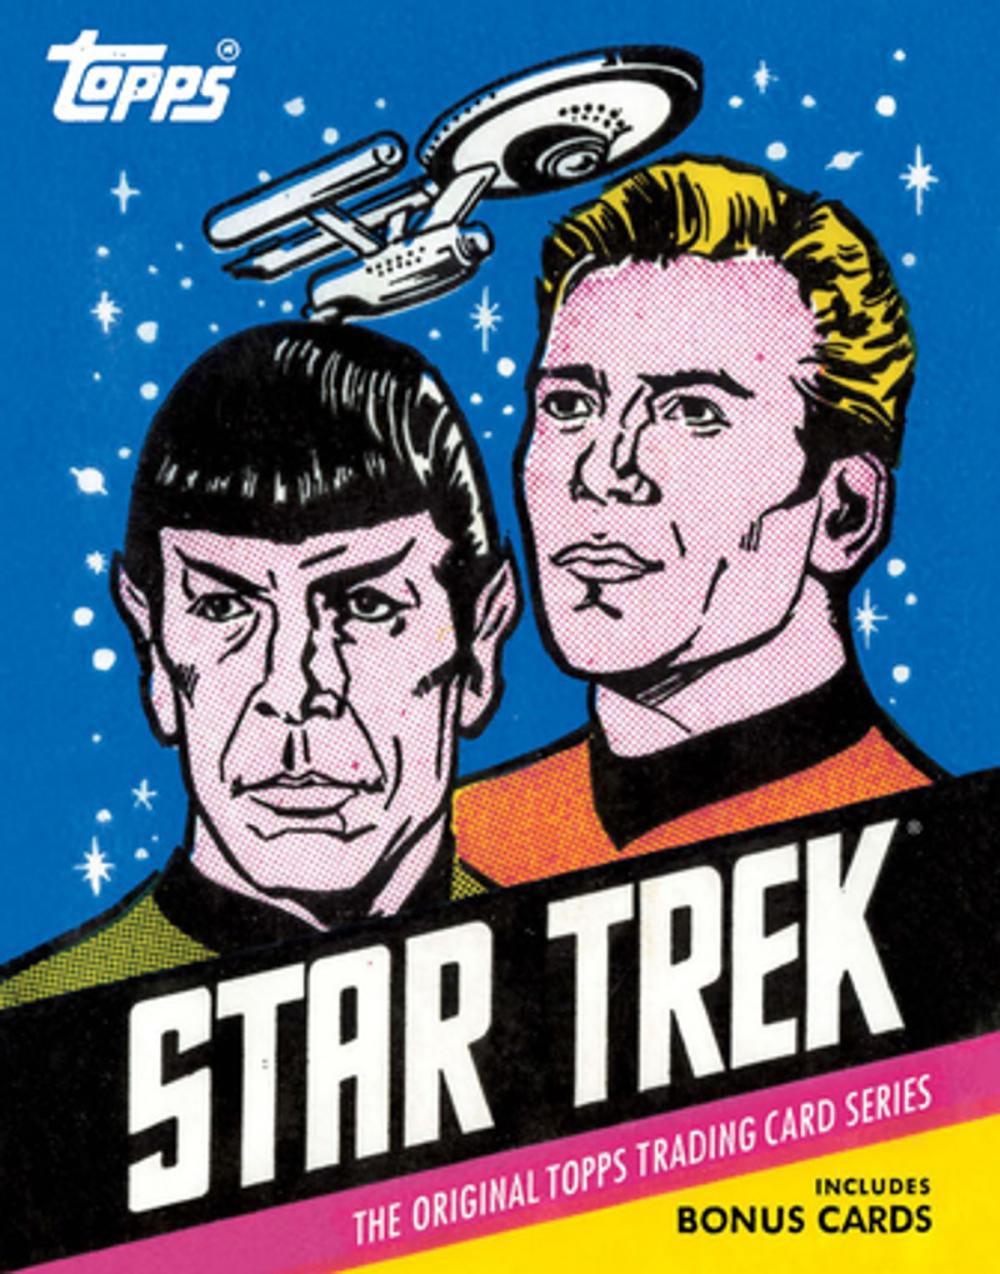 Big bigCover of Star Trek: The Original Topps Trading Card Series